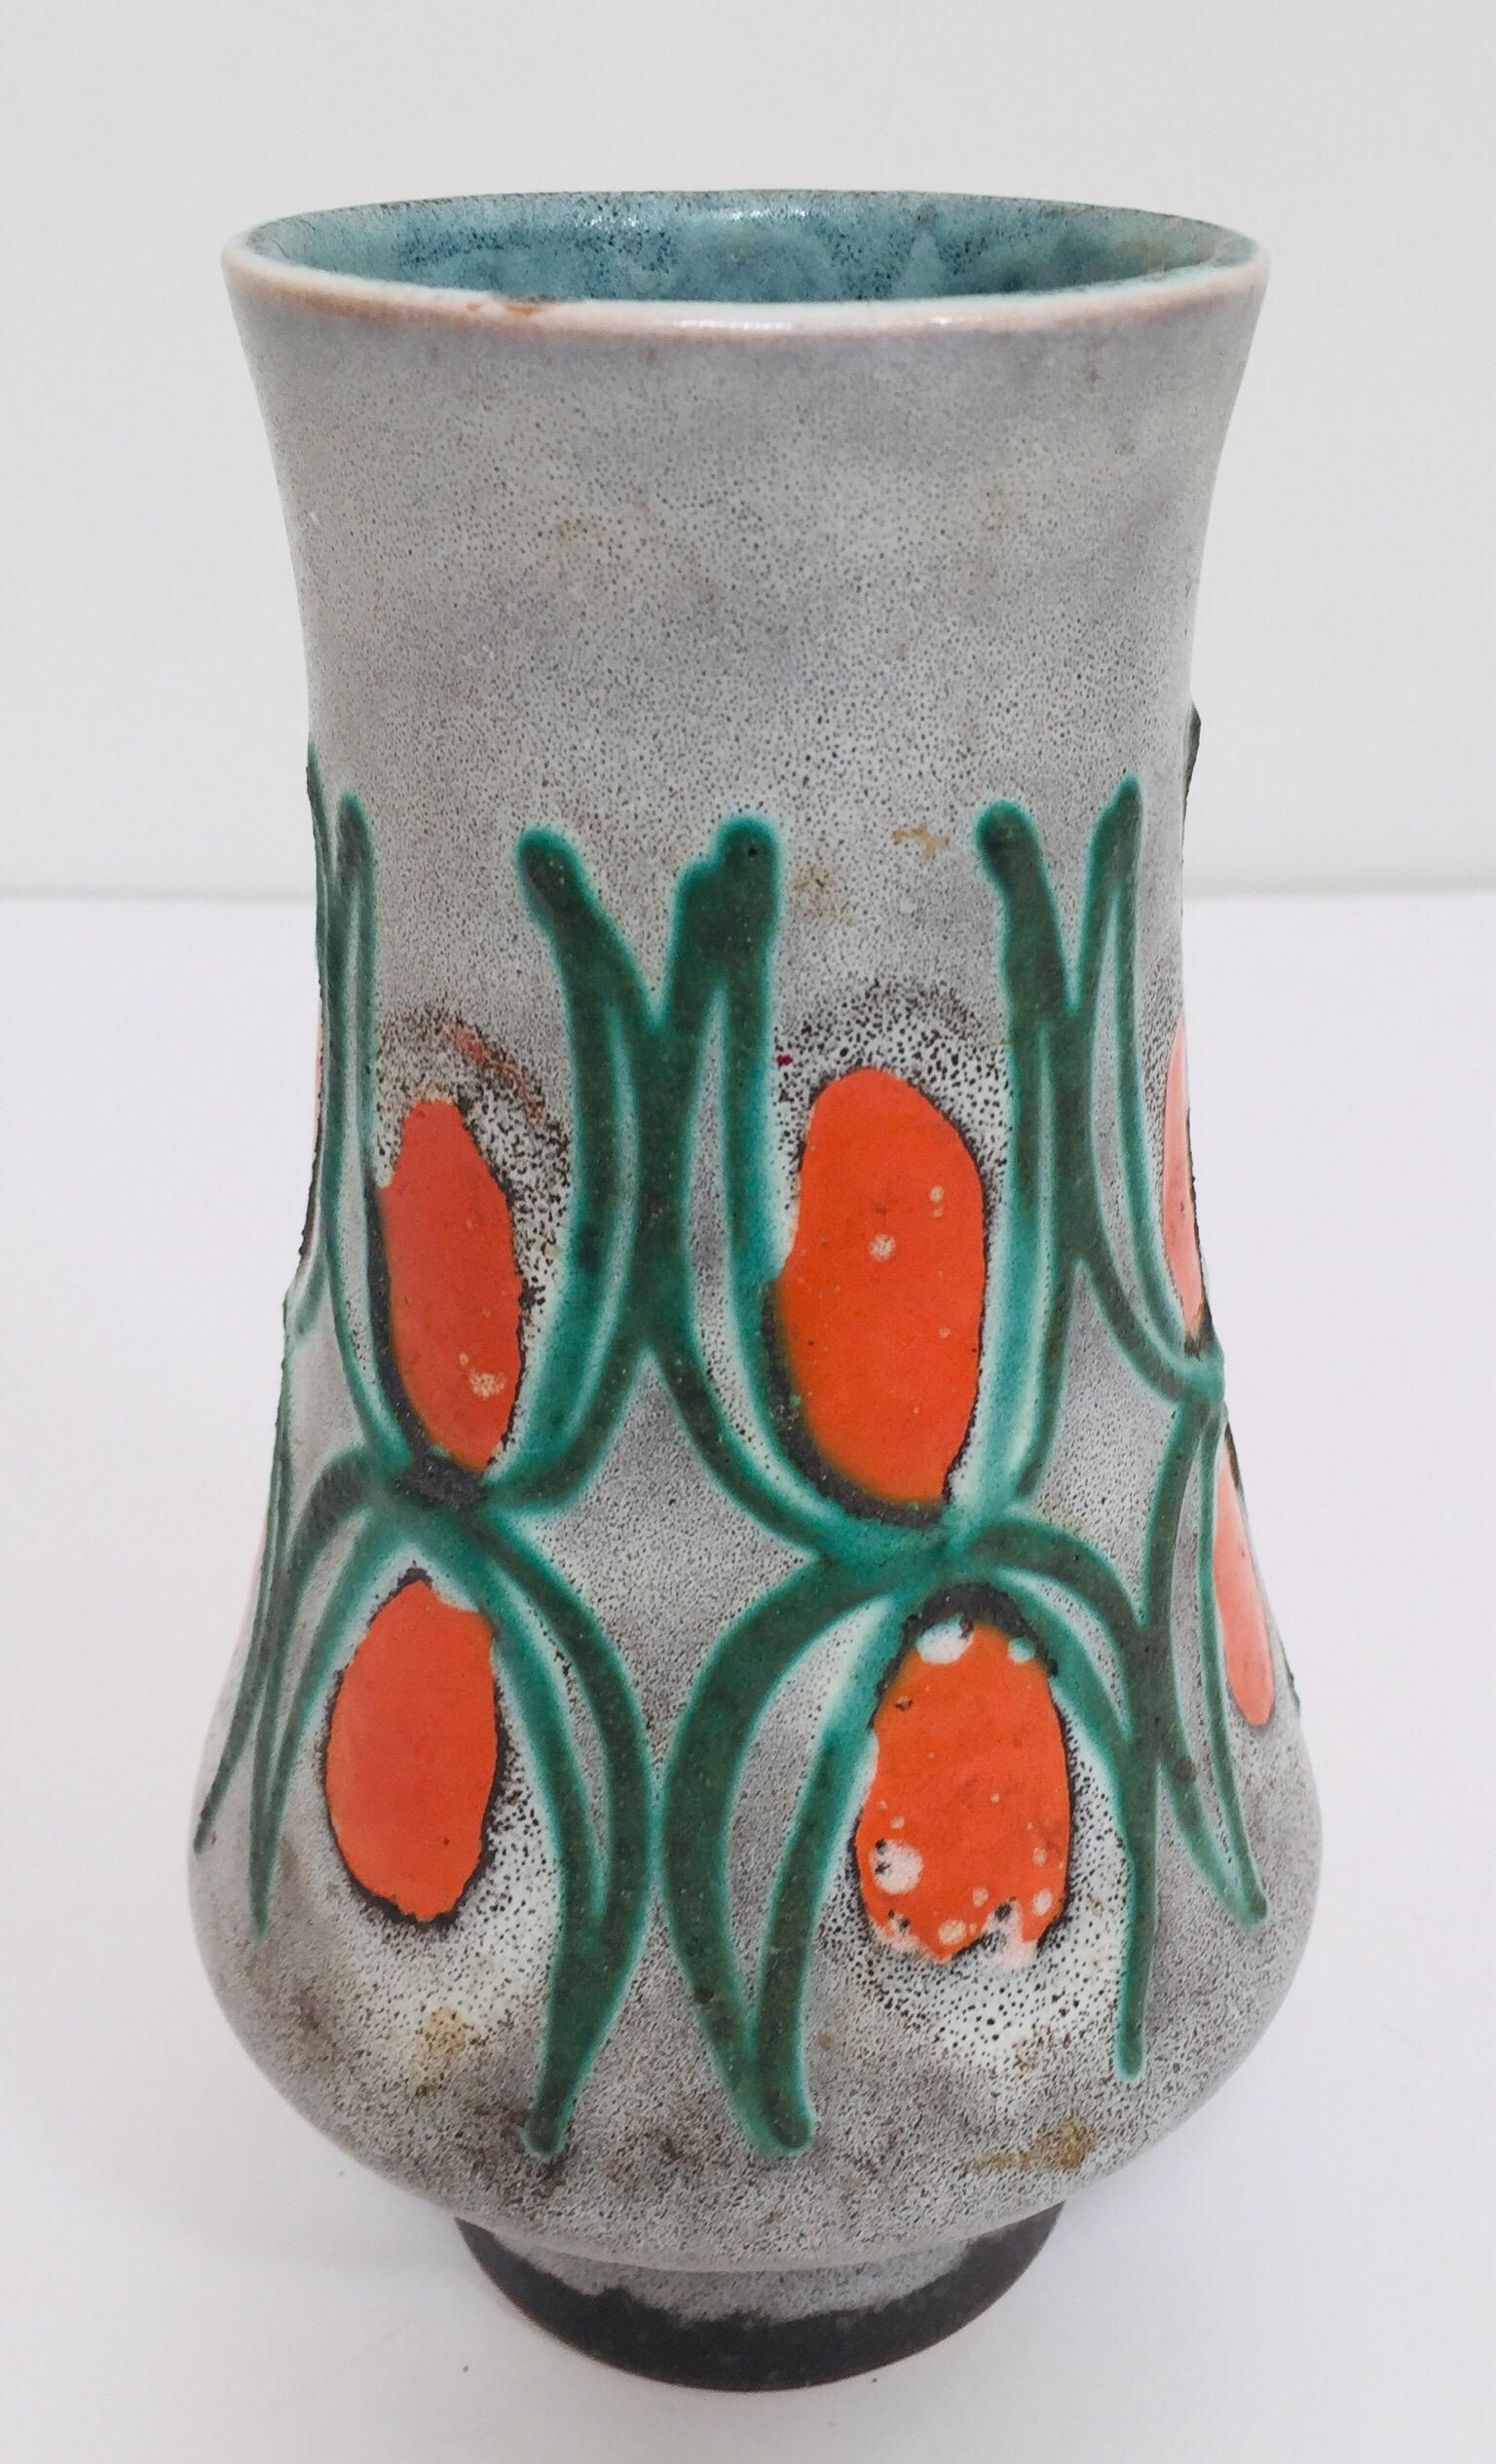 1950s Ceramic Studio pottery vase, Germany Bauhaus.
Strehla East Germany, 1950 ‘GDR’ ceramic vase.
Vibrant vase in a grey with orange, red, charcoal lava glaze finish.
Straightforward and minimalistic design of the 1950s Bauhaus design era.
This